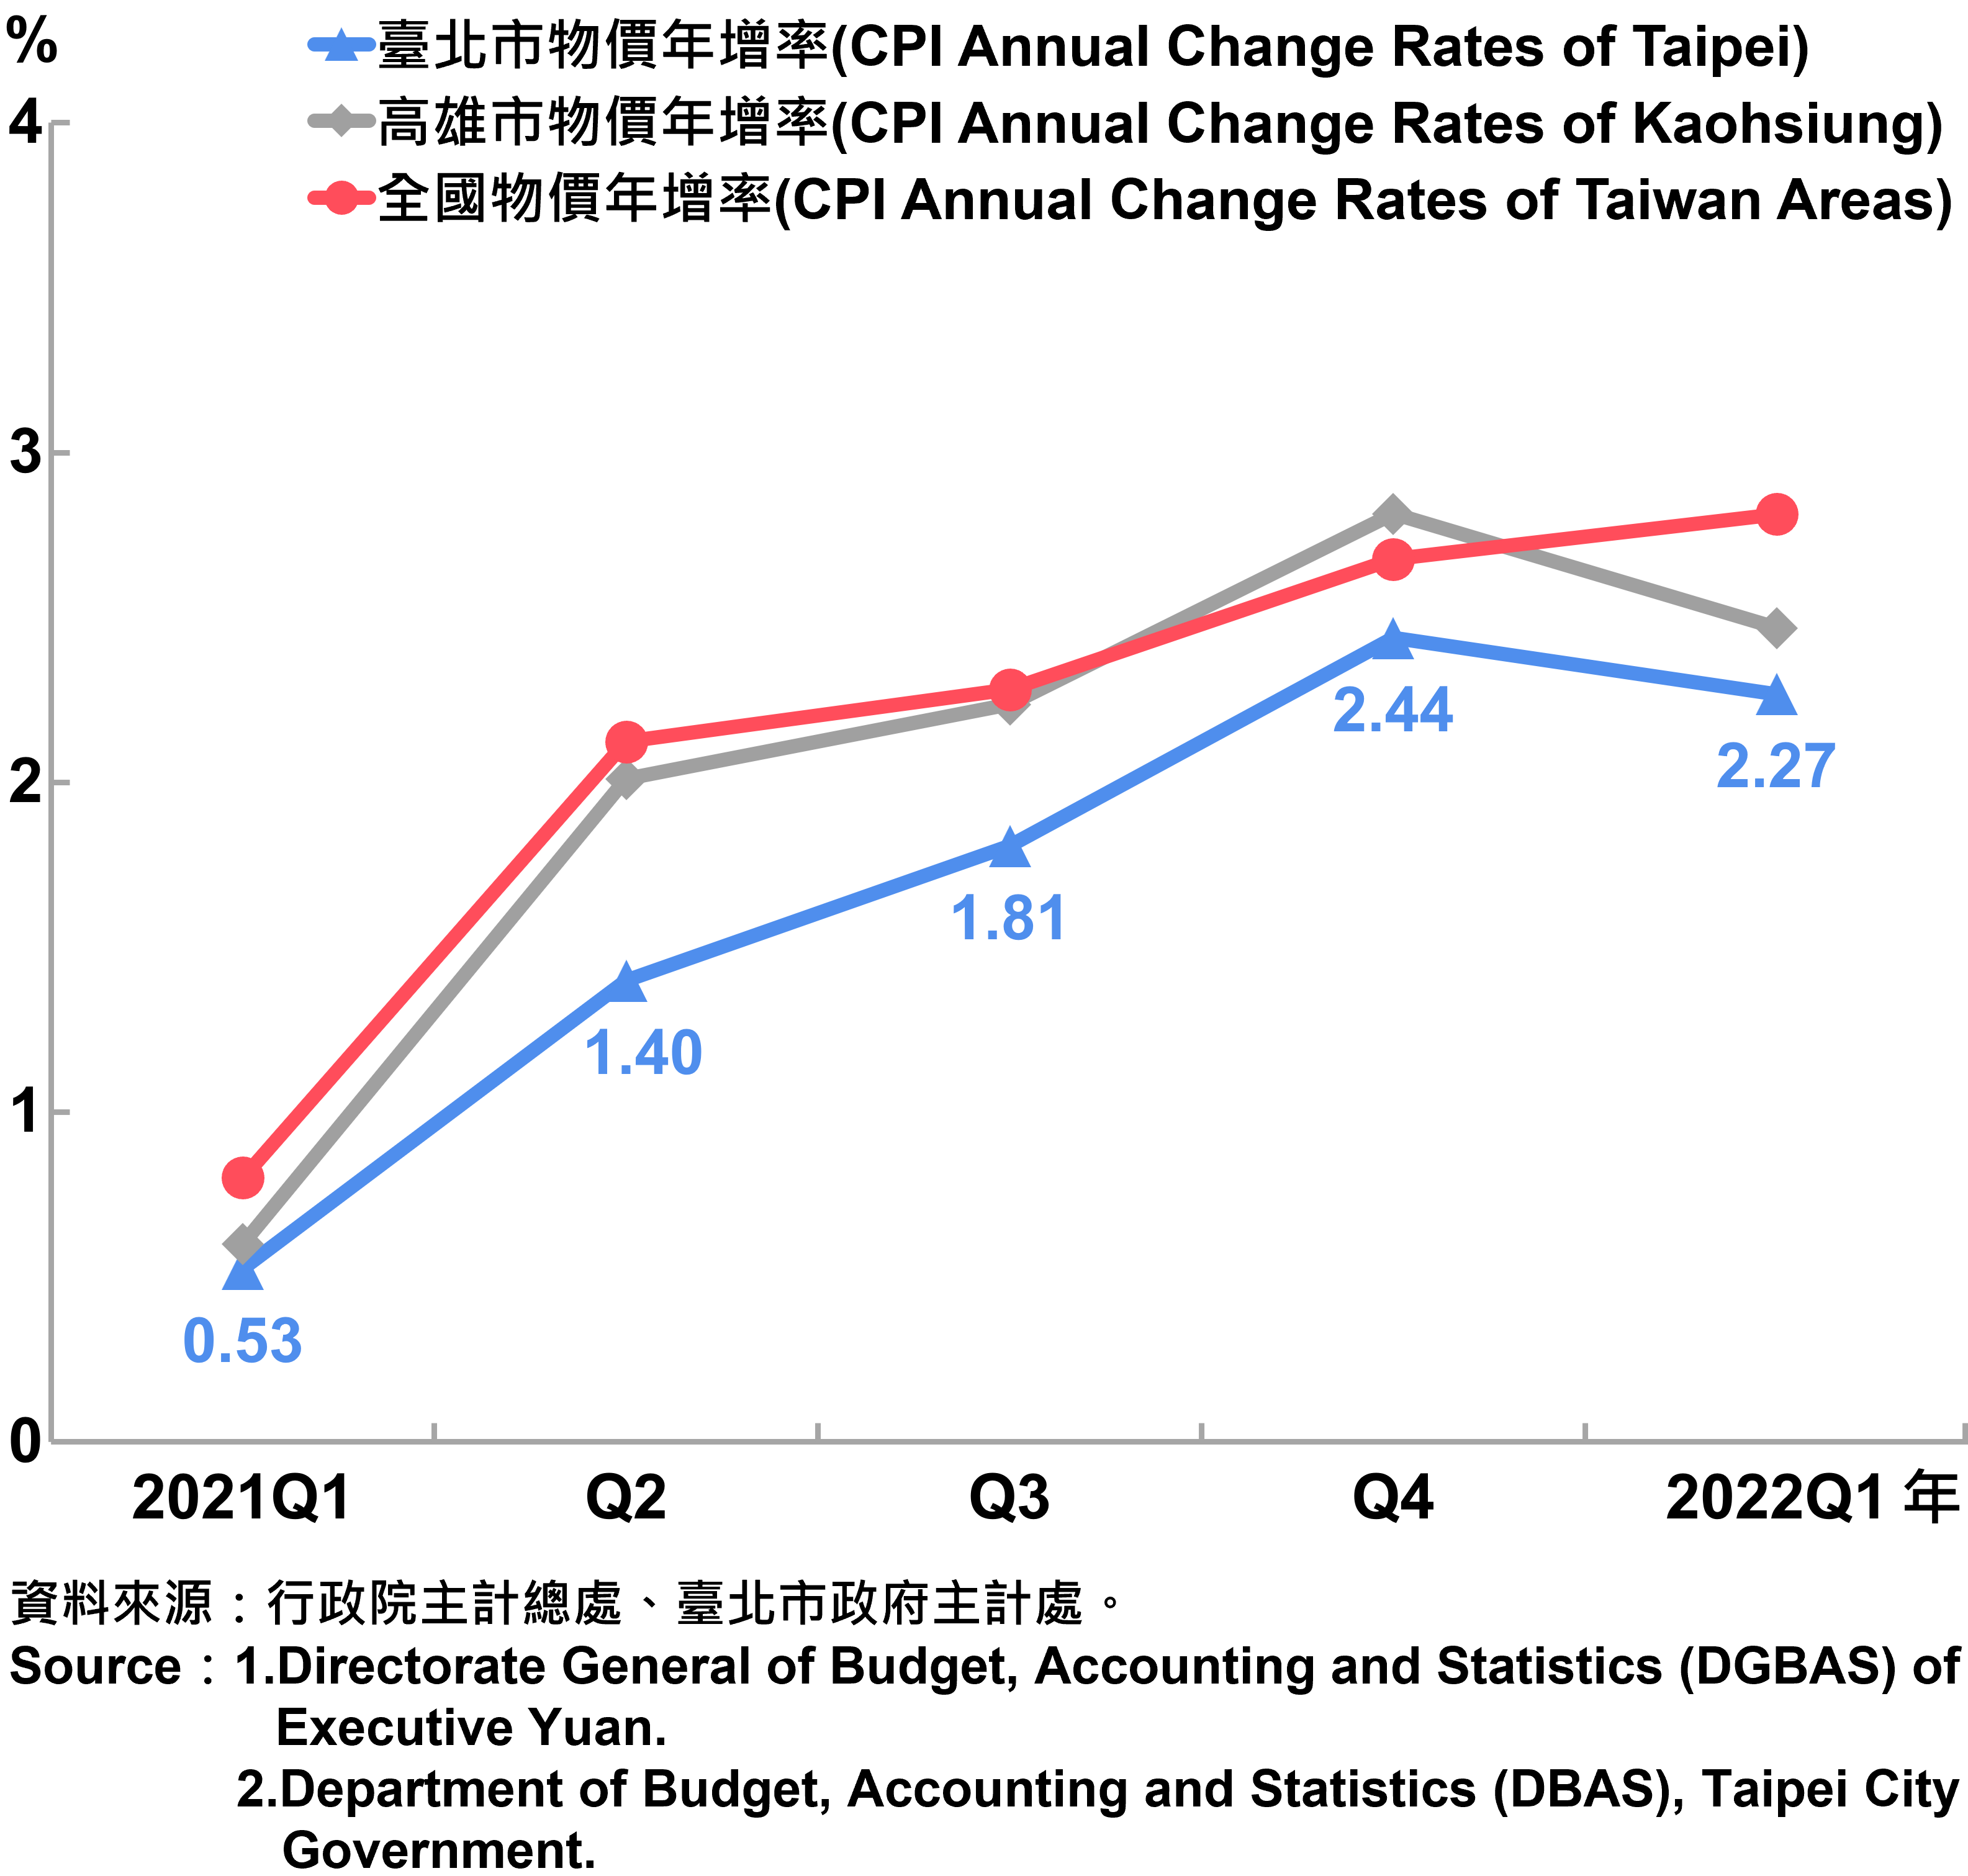 臺北市消費者物價指數（CPI）年增率—2022Q1 Annual Growth Rate of CPI in Taipei City—2022Q1